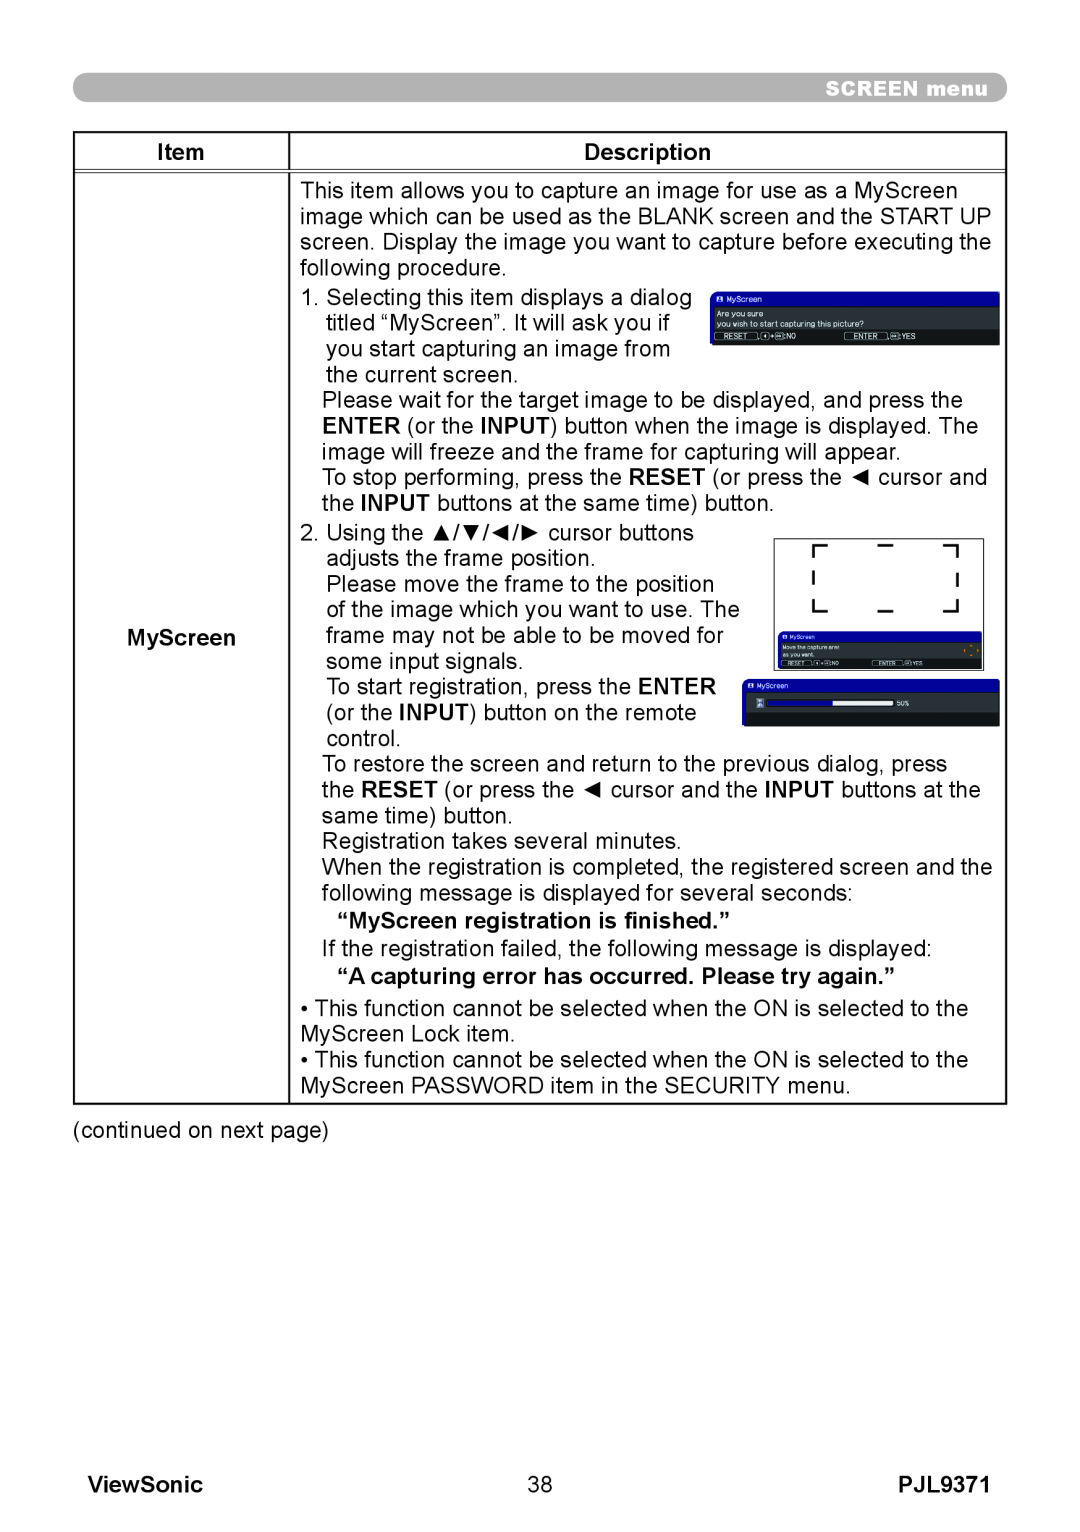 ViewSonic pjl9371 manual Item, Description, “MyScreen registration is finished.”, ViewSonic 